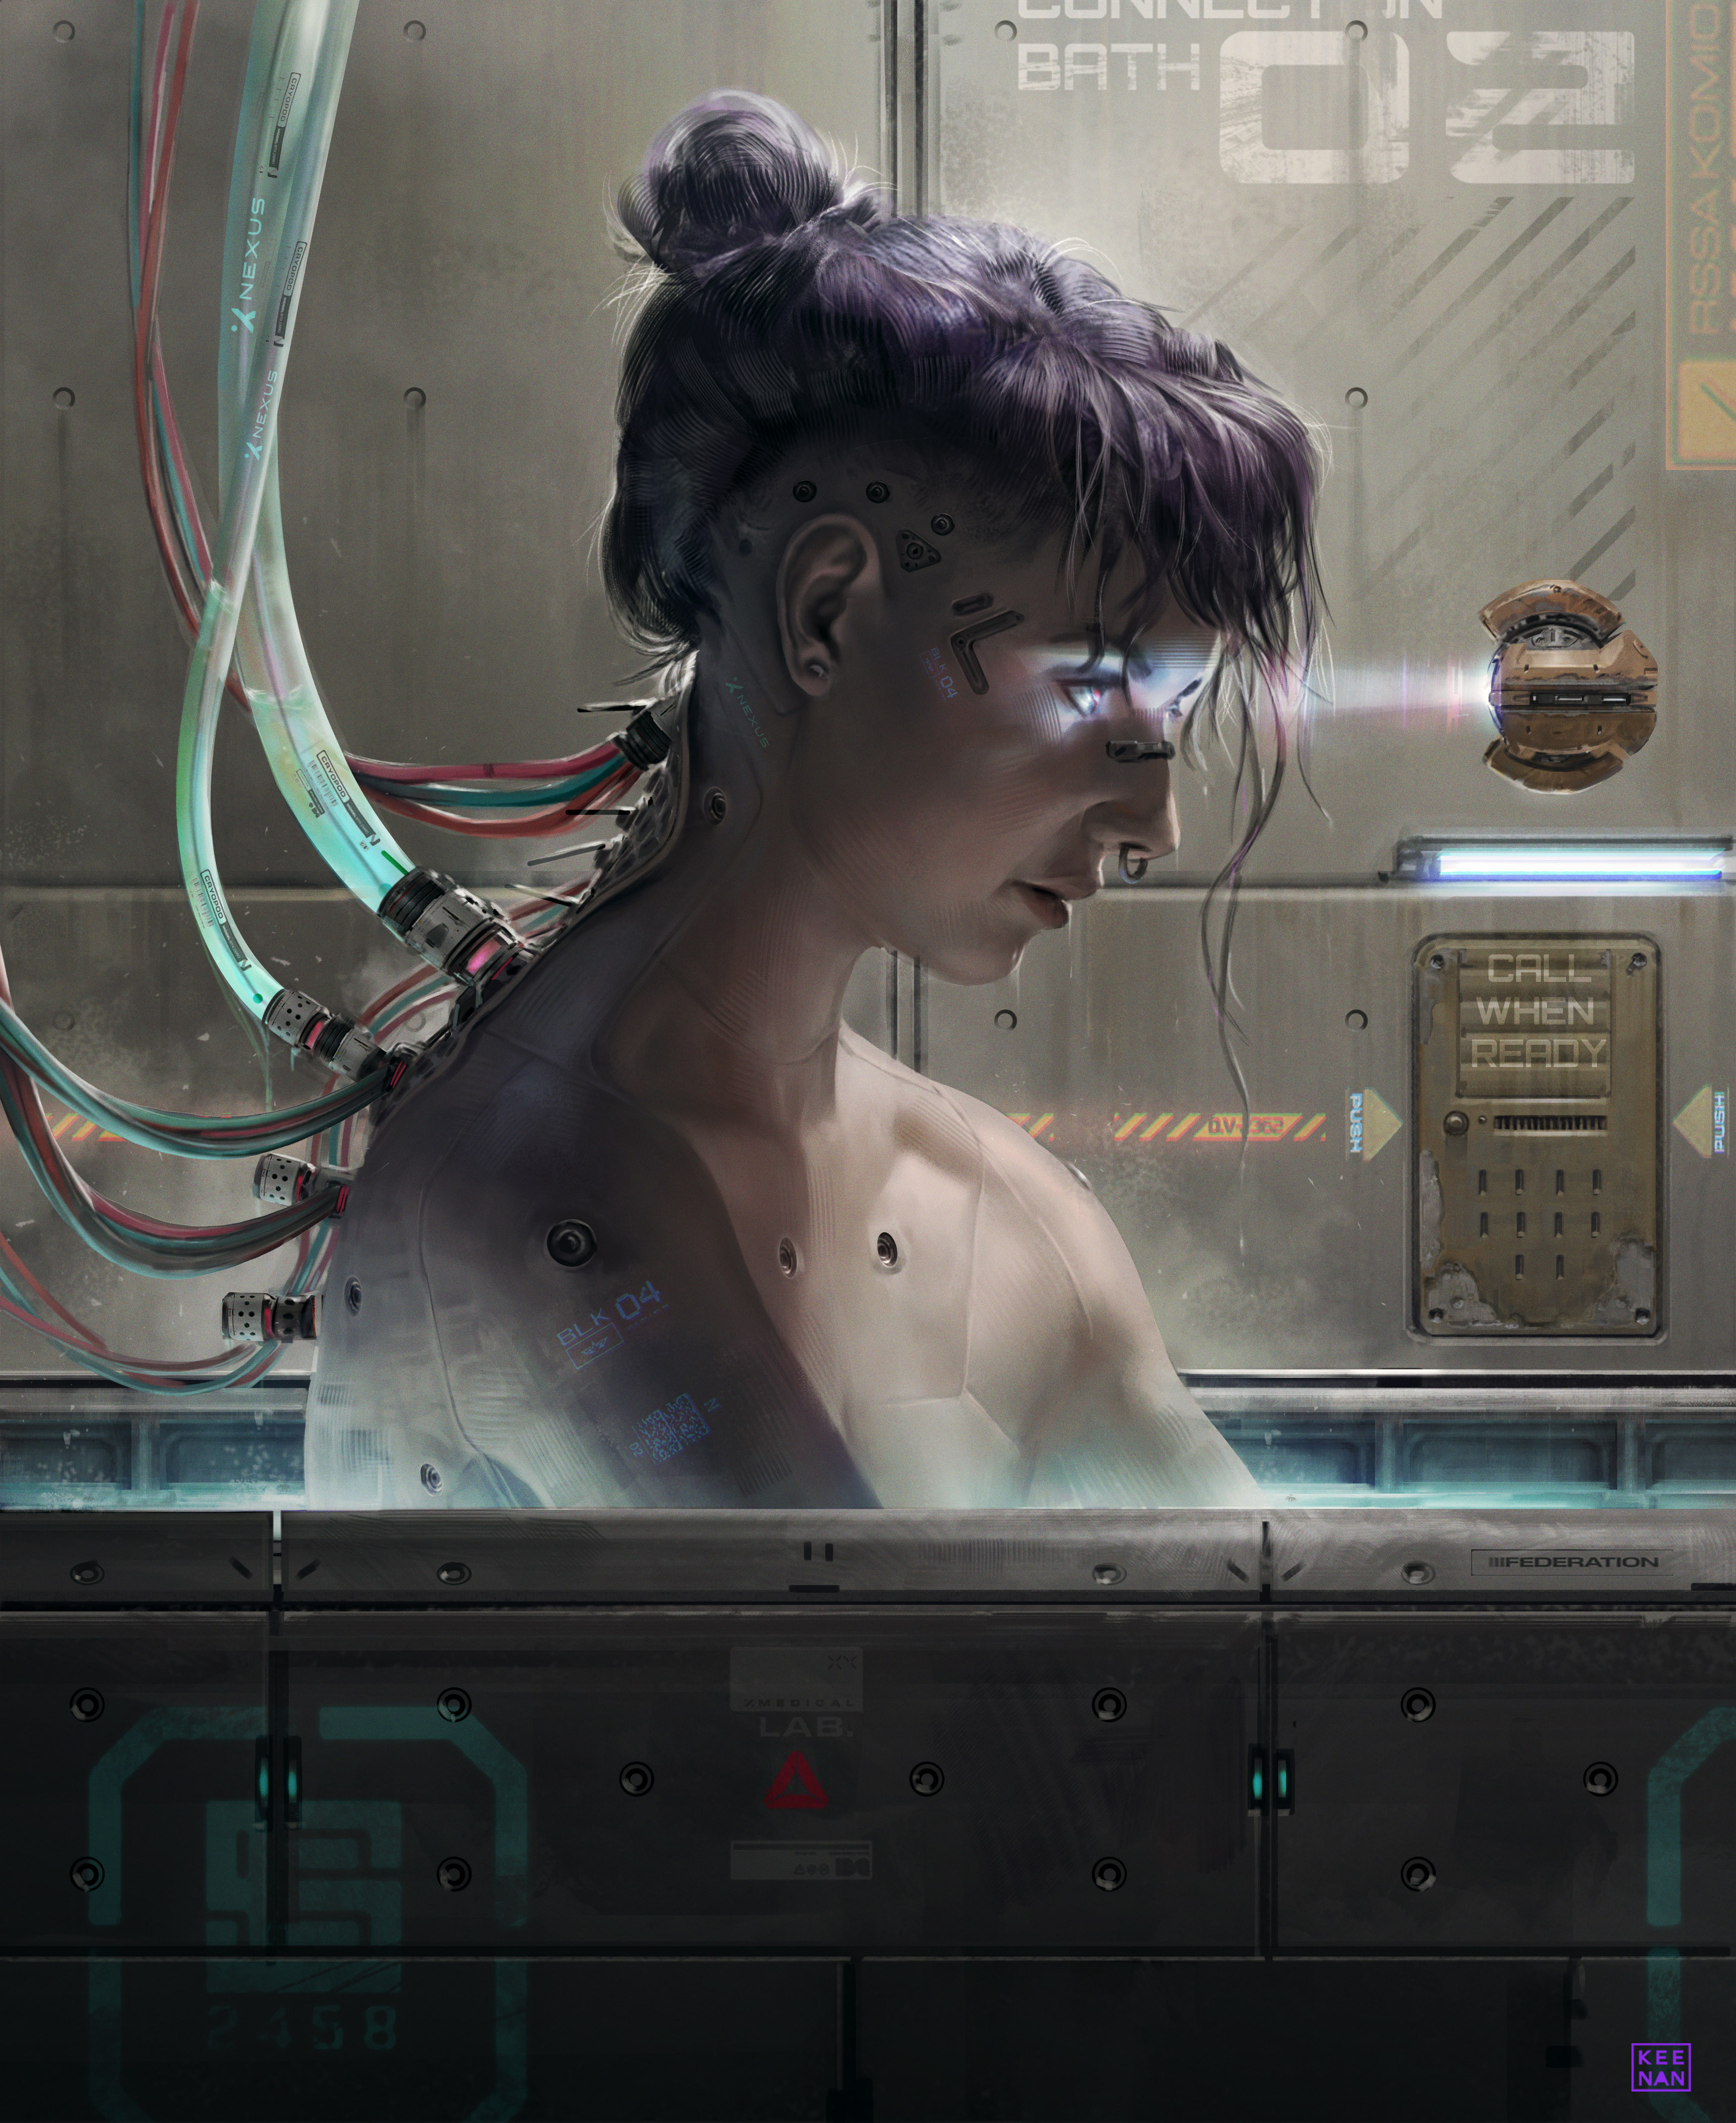 Dave Keenan Digital Art Artwork Illustration Women Cyberpunk Bath Short Hair Vertical Futuristic 3434x4200